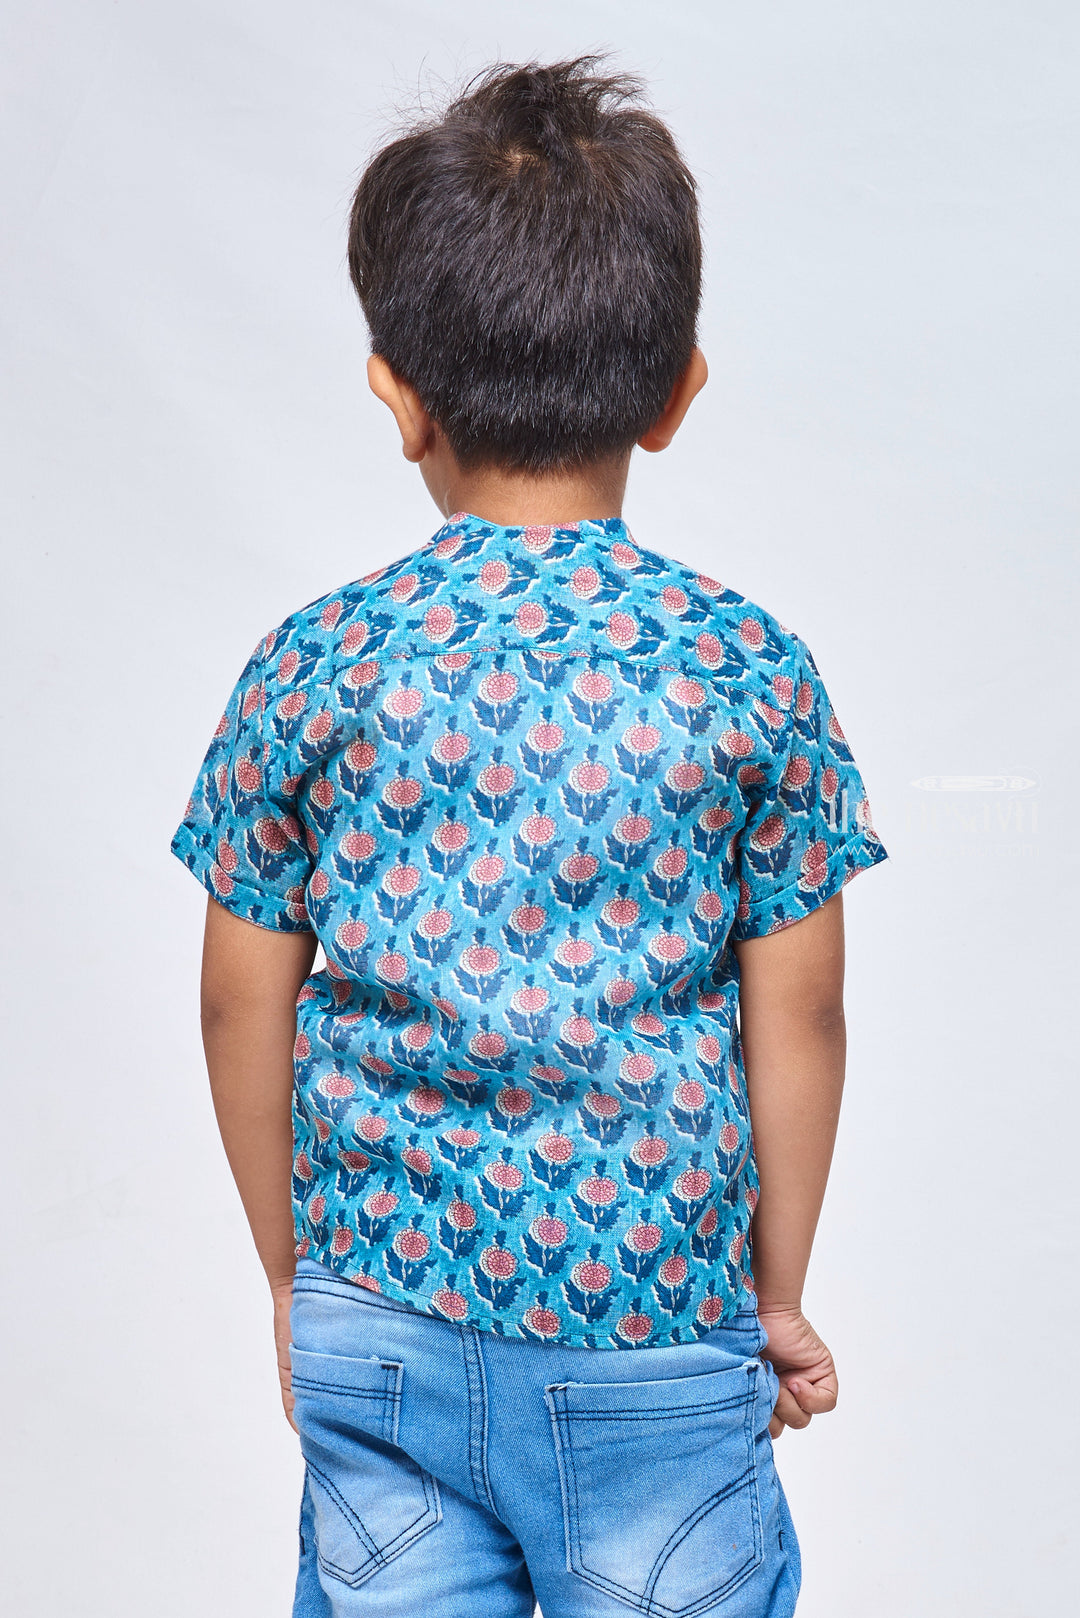 The Nesavu Boys Linen Shirt Linen Blossoms: Floral Print Boys' Shirt for a Cool and Comfortable Summer Vibe Nesavu Floral Printed Shirt for Boys | Boy Baby shirts | The Nesavu